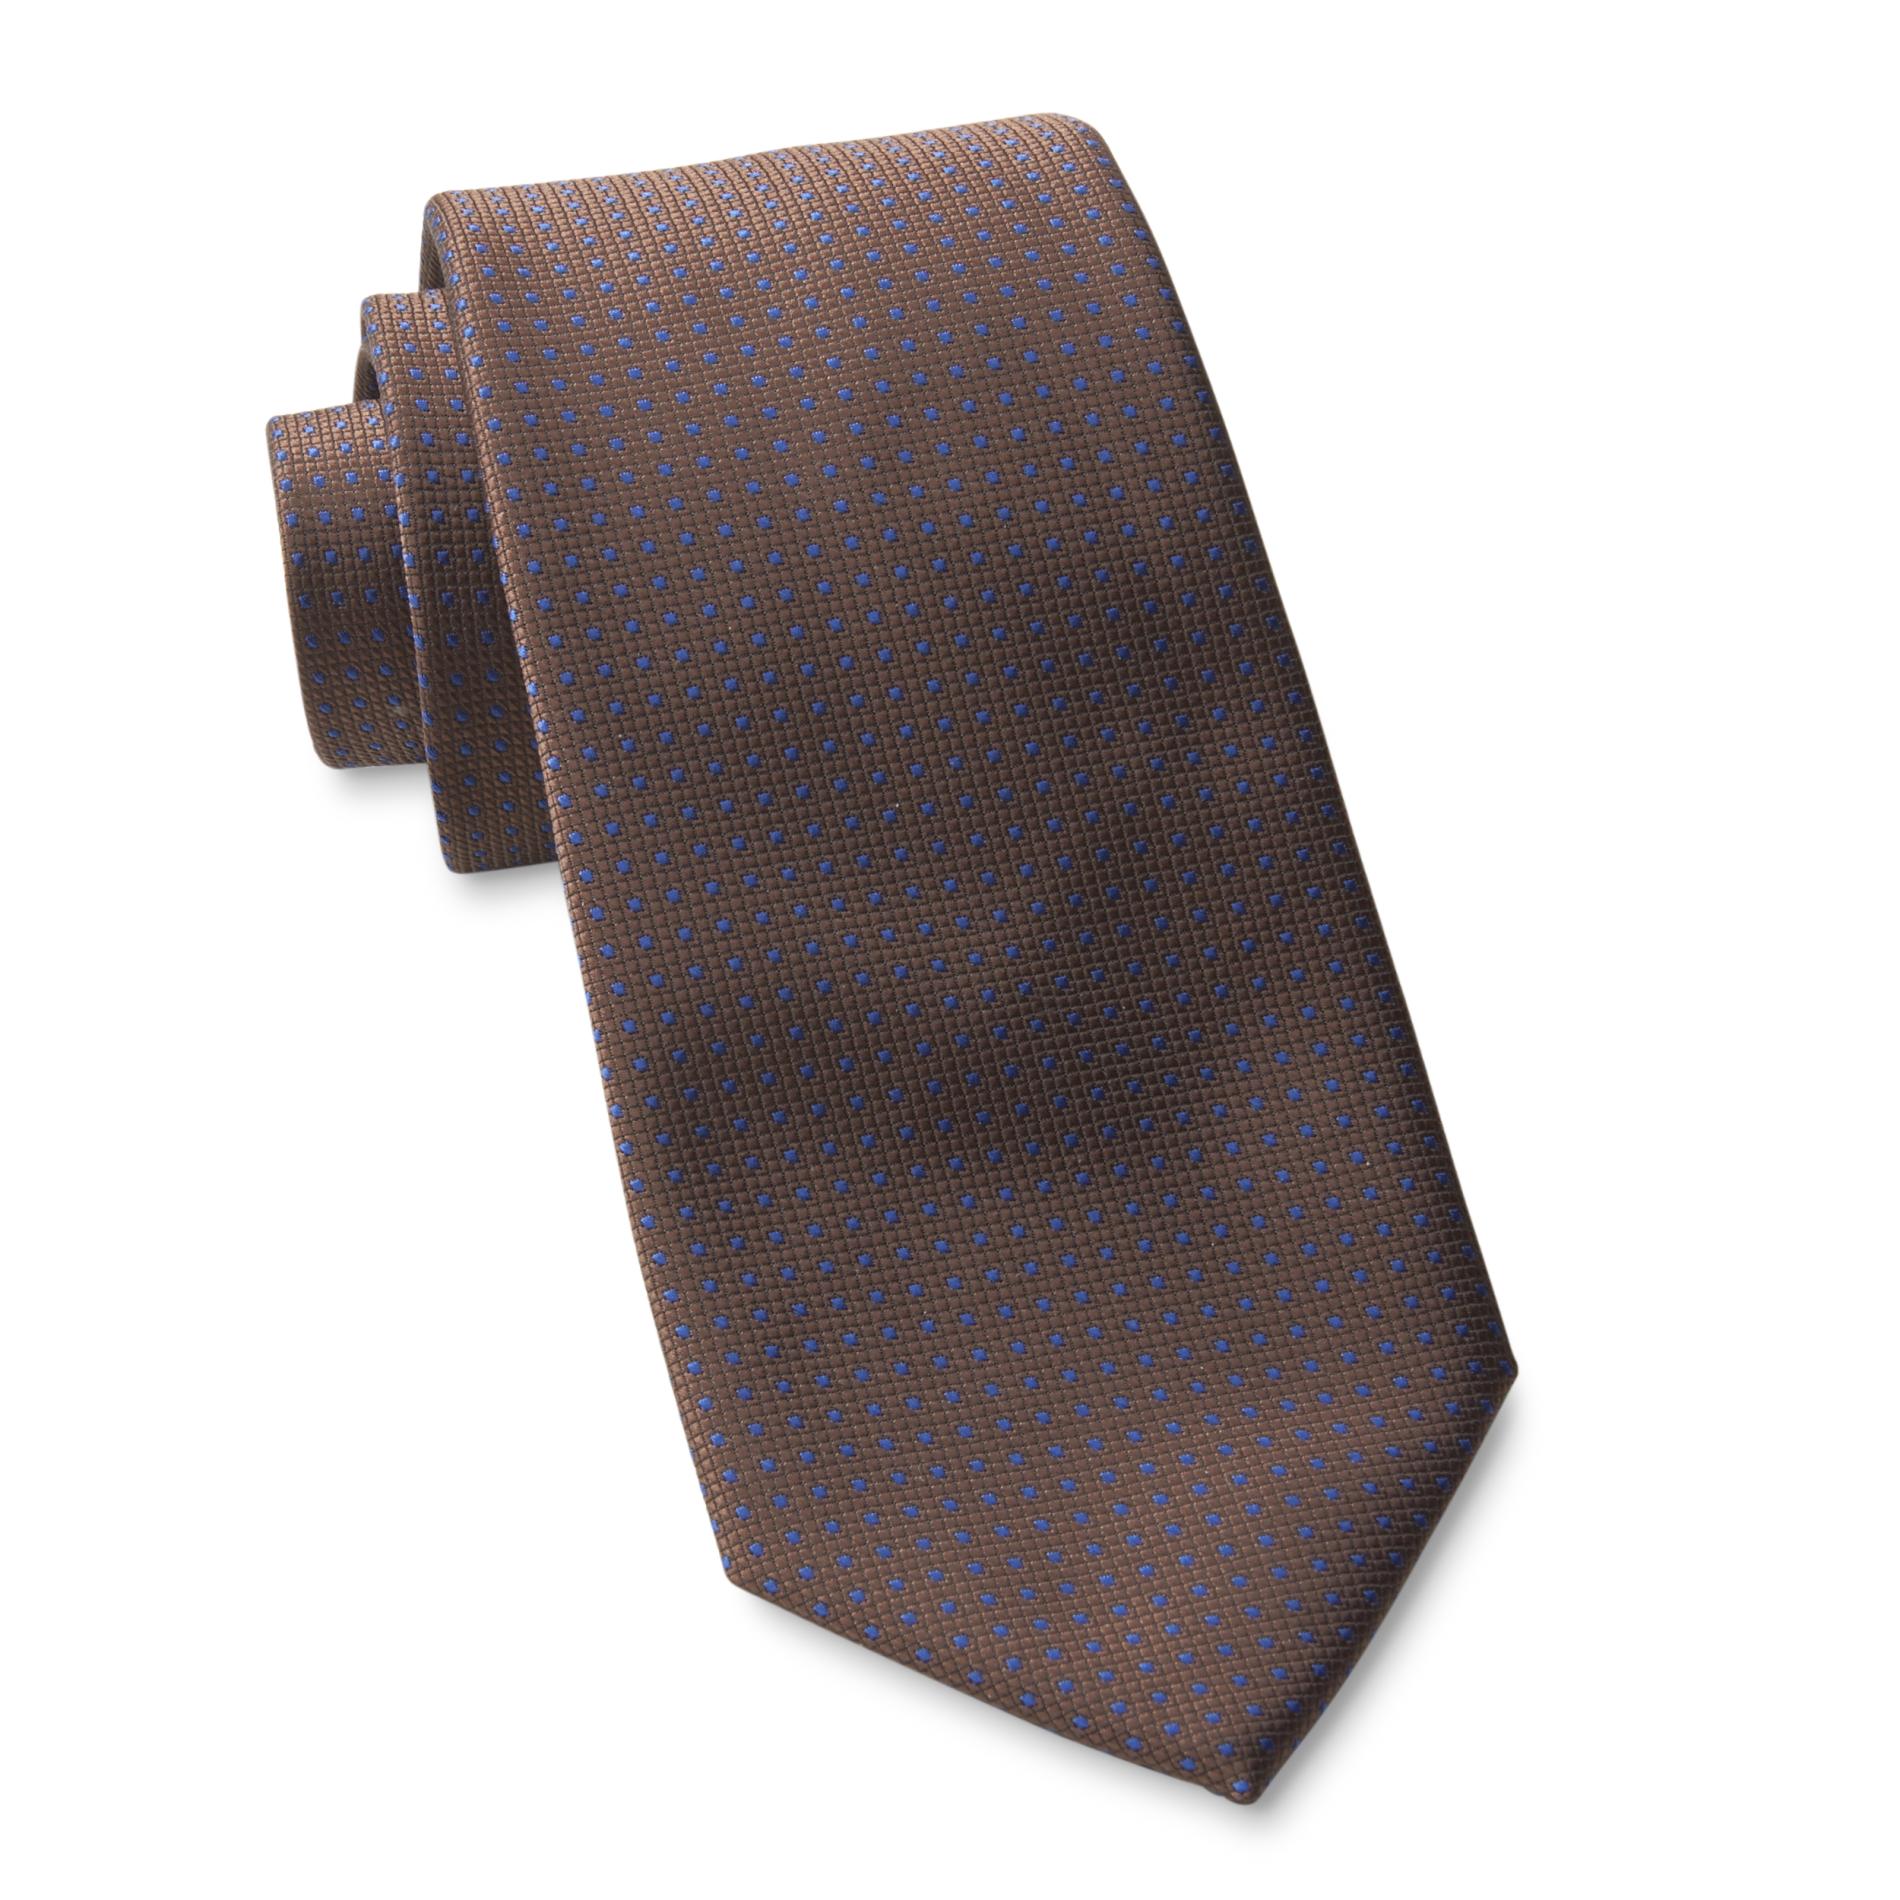 David Taylor Collection Men's Necktie - Dot